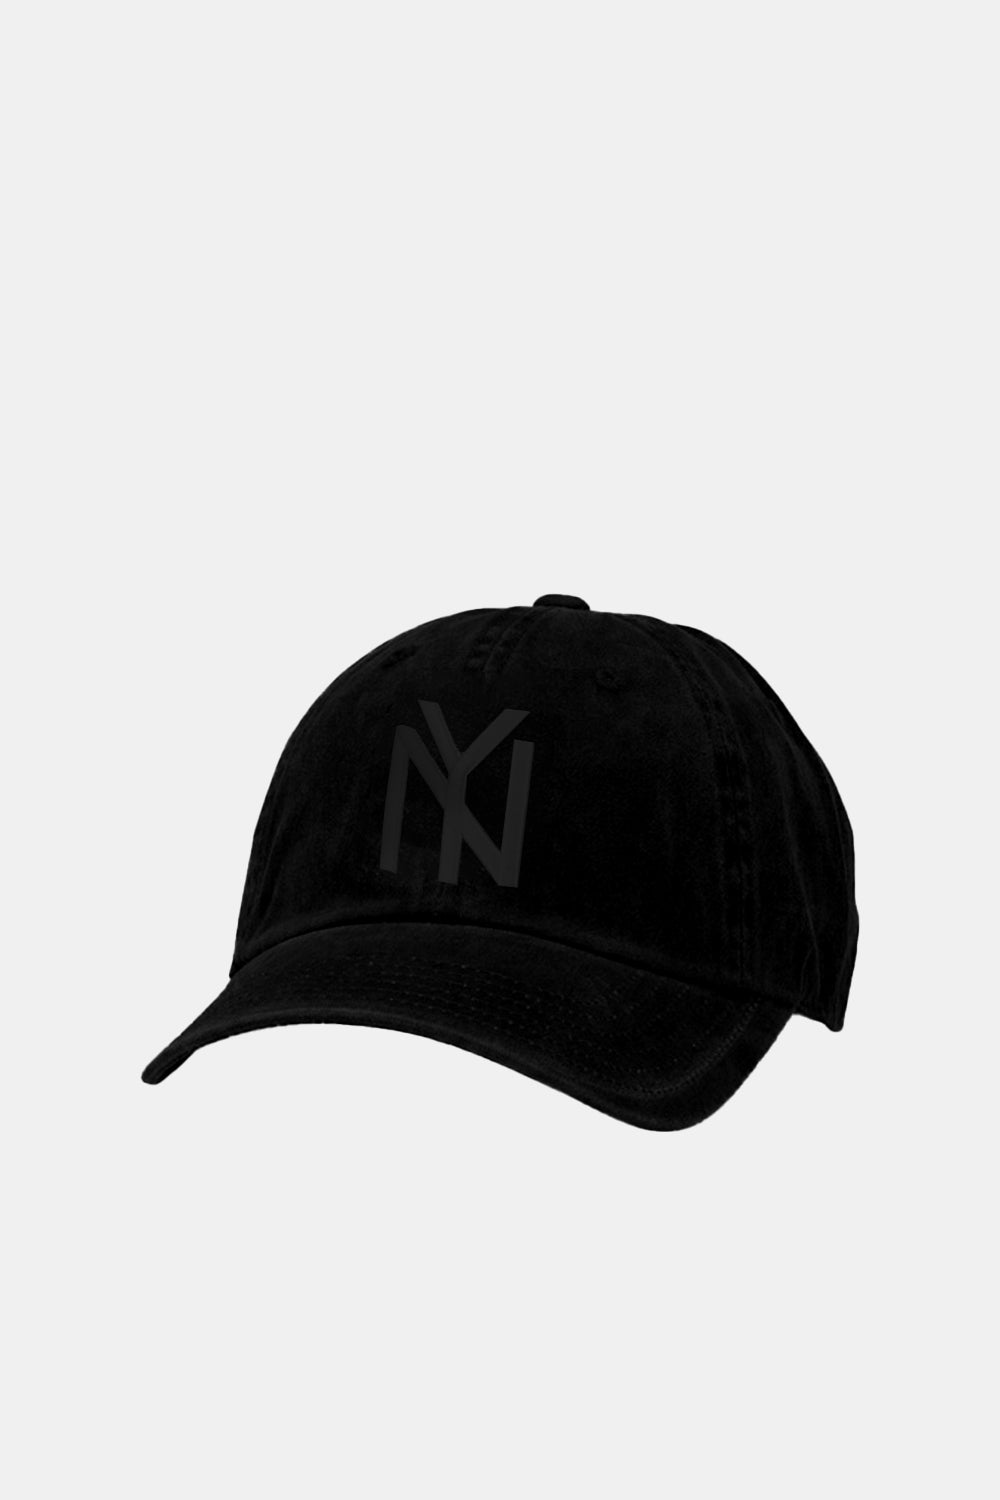 American Needle NY Yankees Archive Legend Cap (Black)
